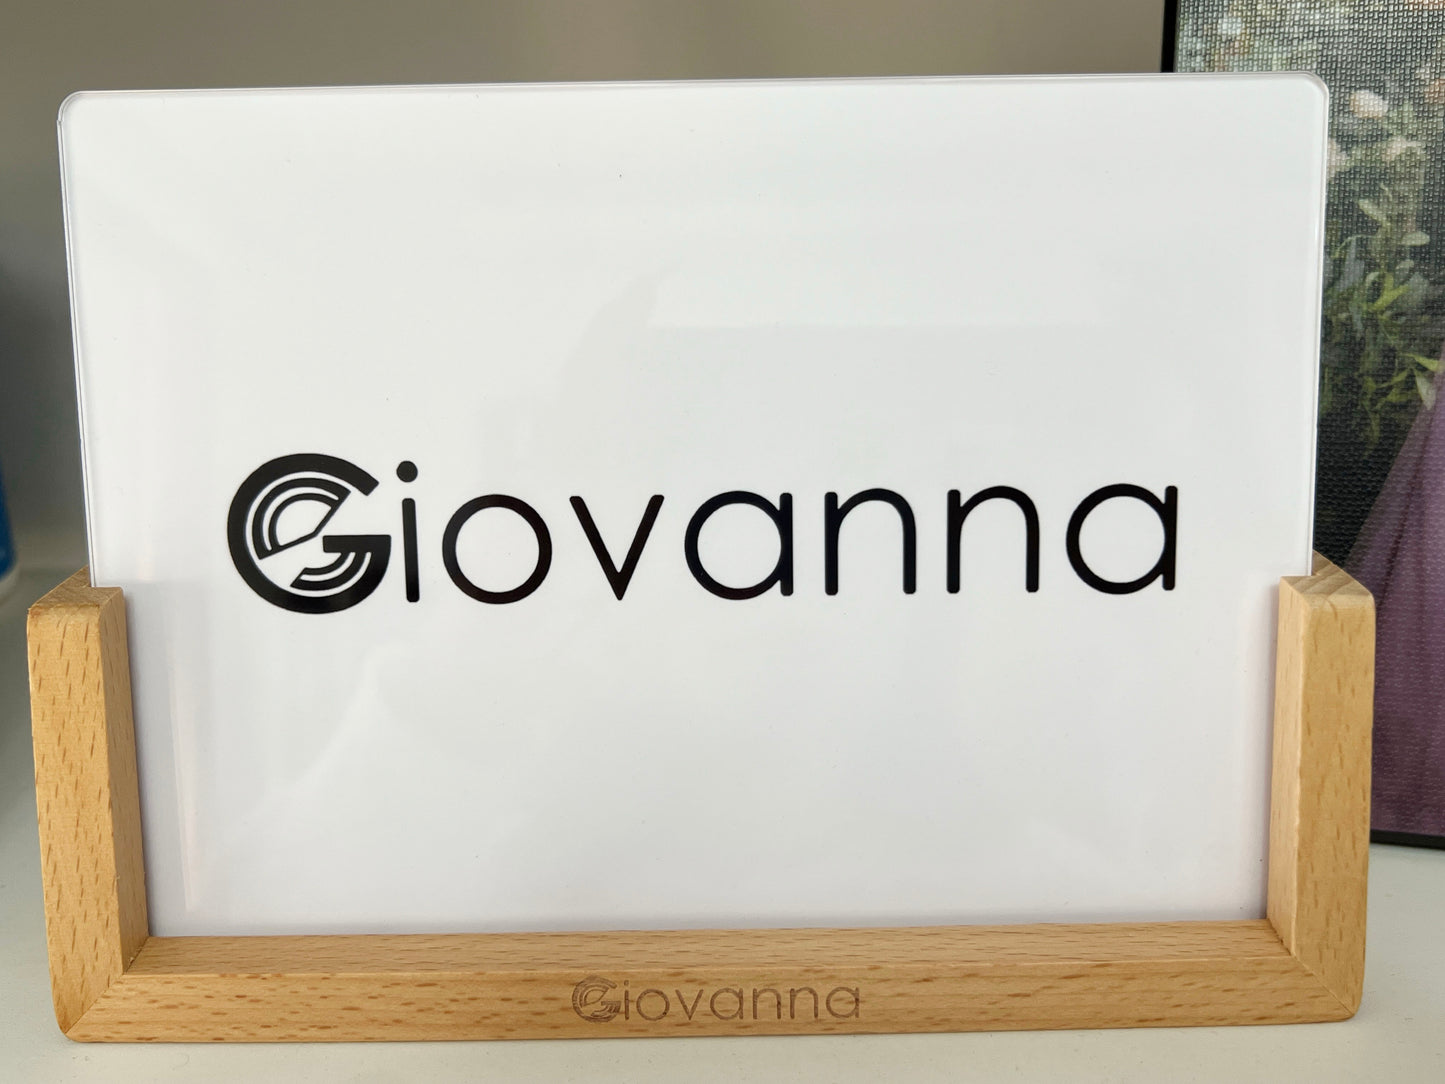 Giovanna Wooden Art Photo Frames Home Decor Housewarming Gift